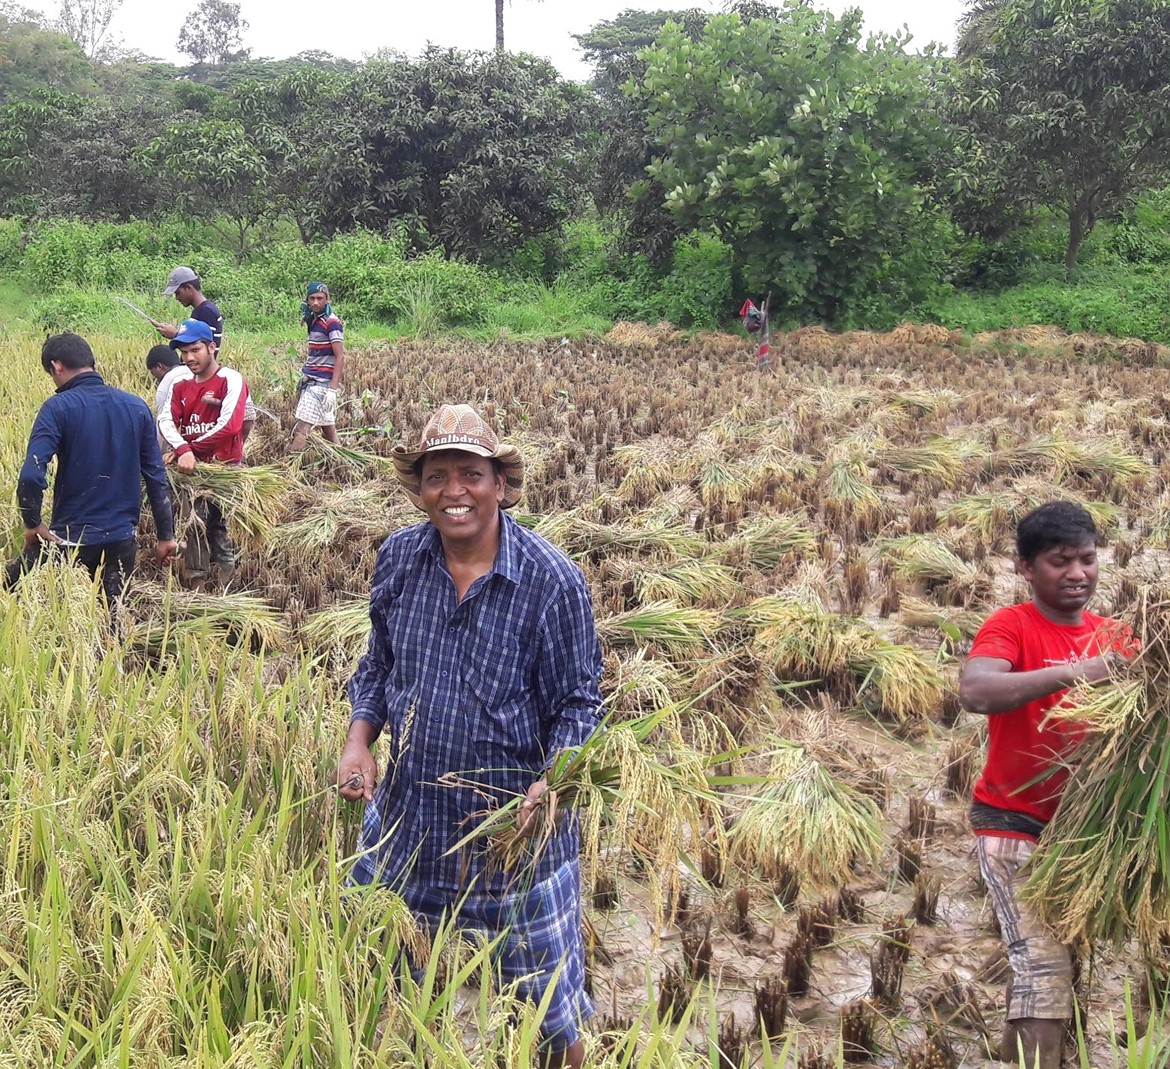 Harvesting rice in Bangladesh